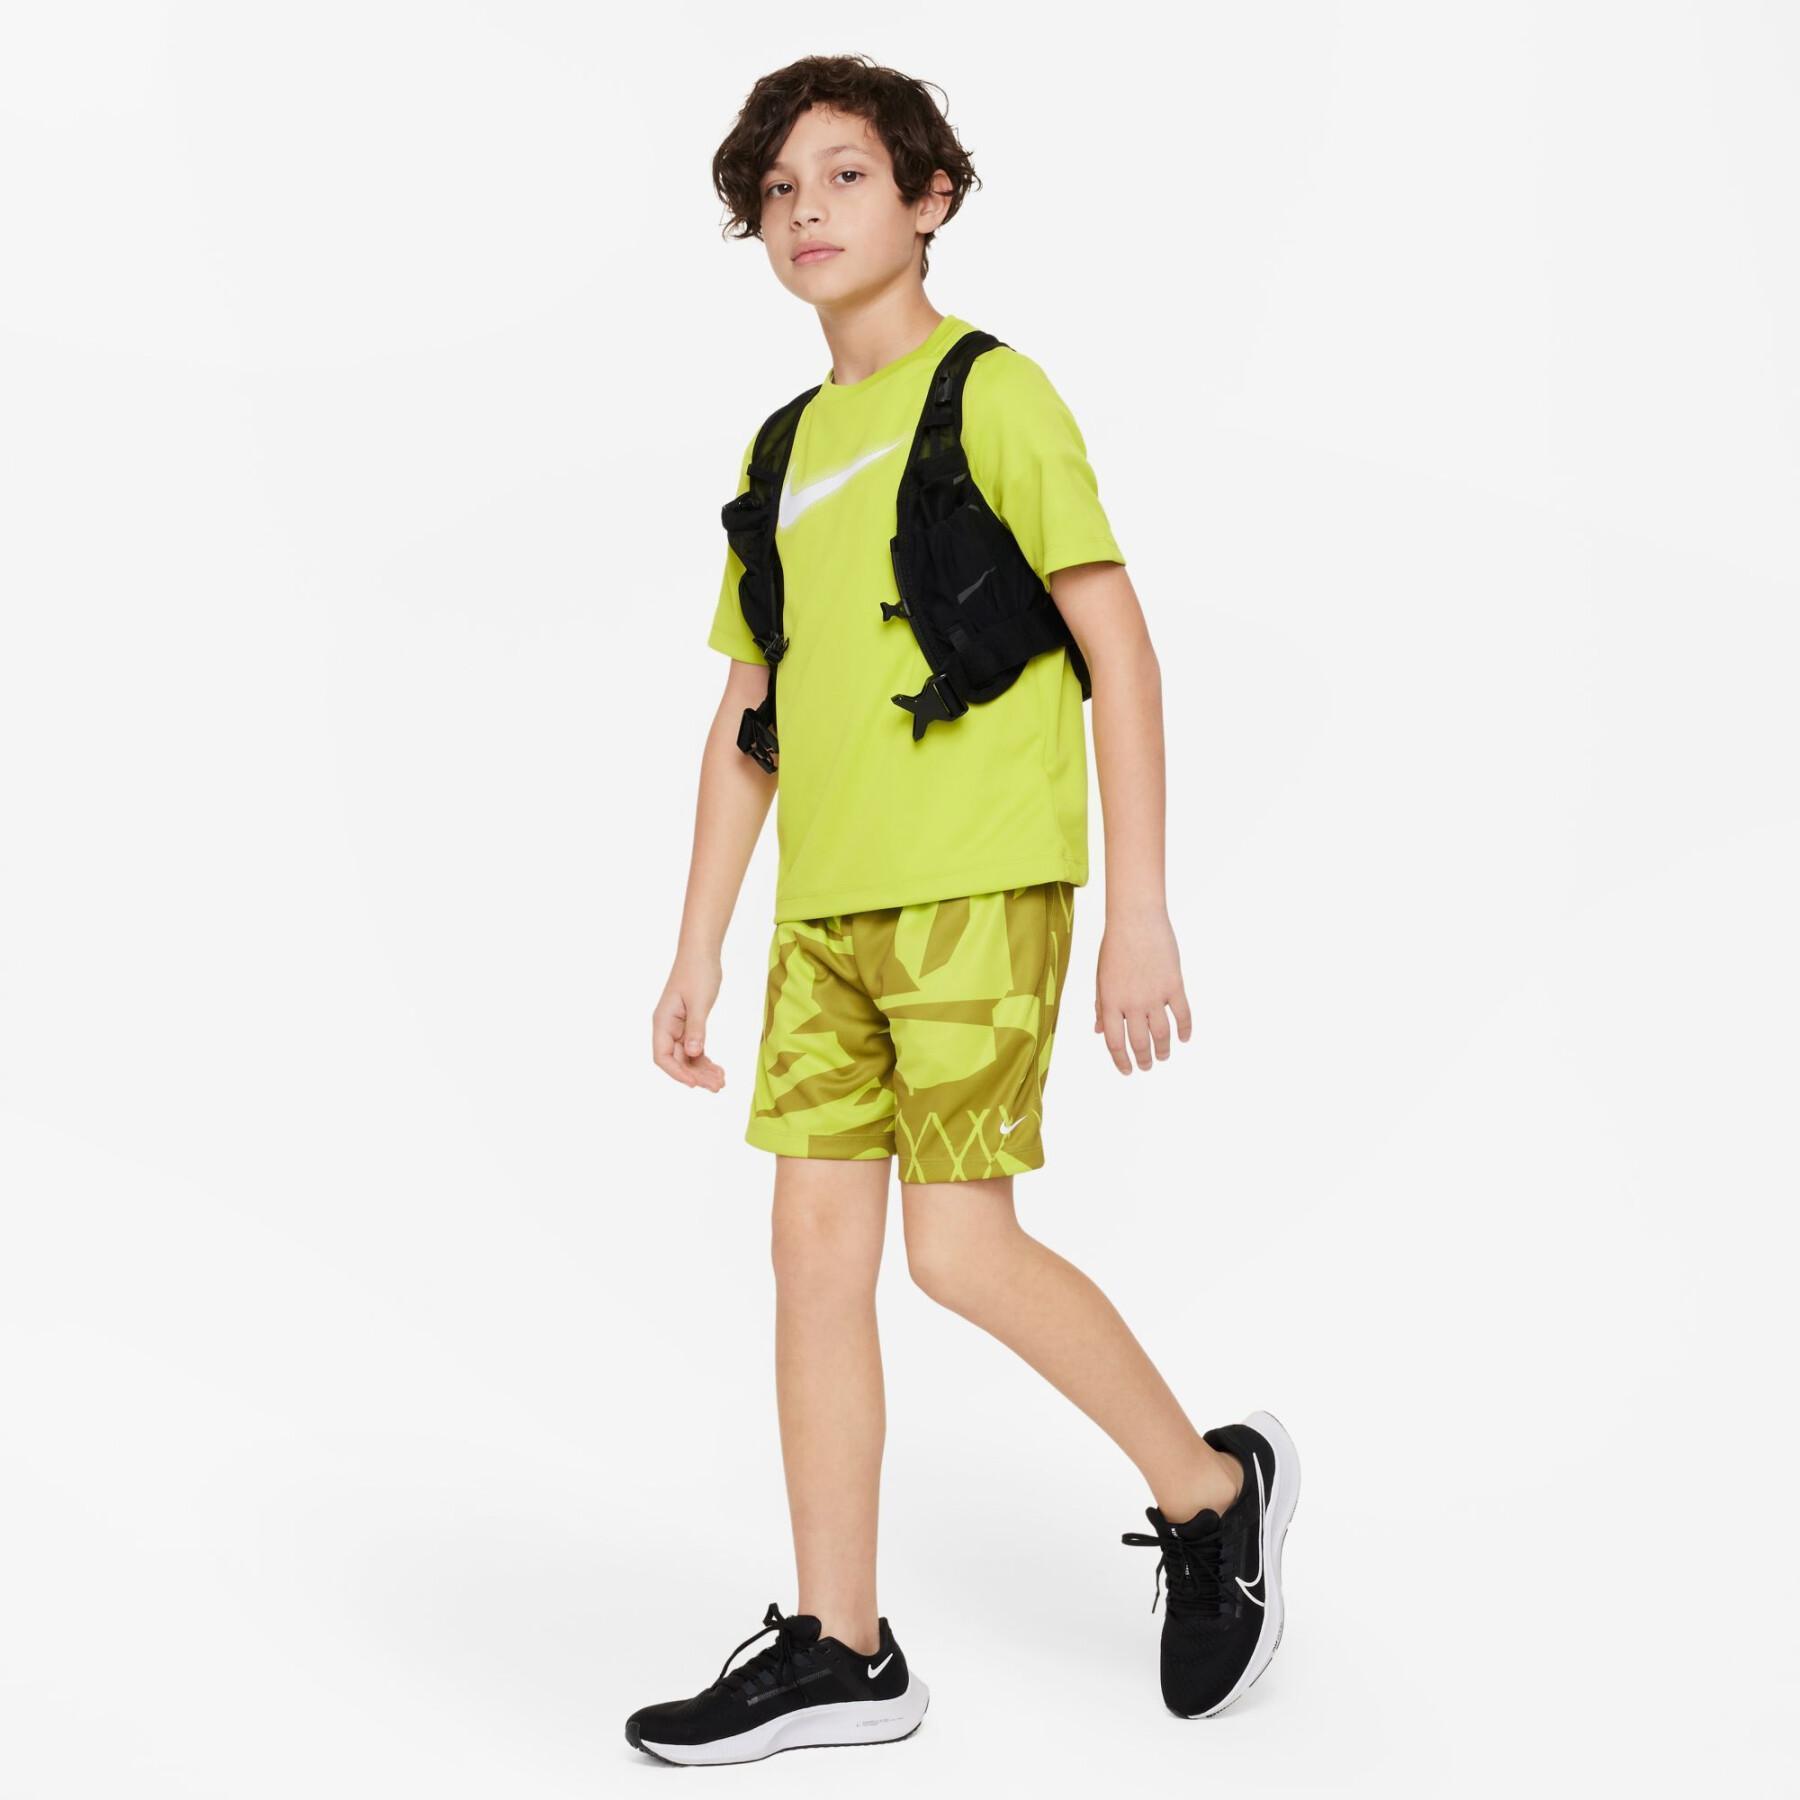 Children's shorts Nike Dri-FIT Multi + AOP